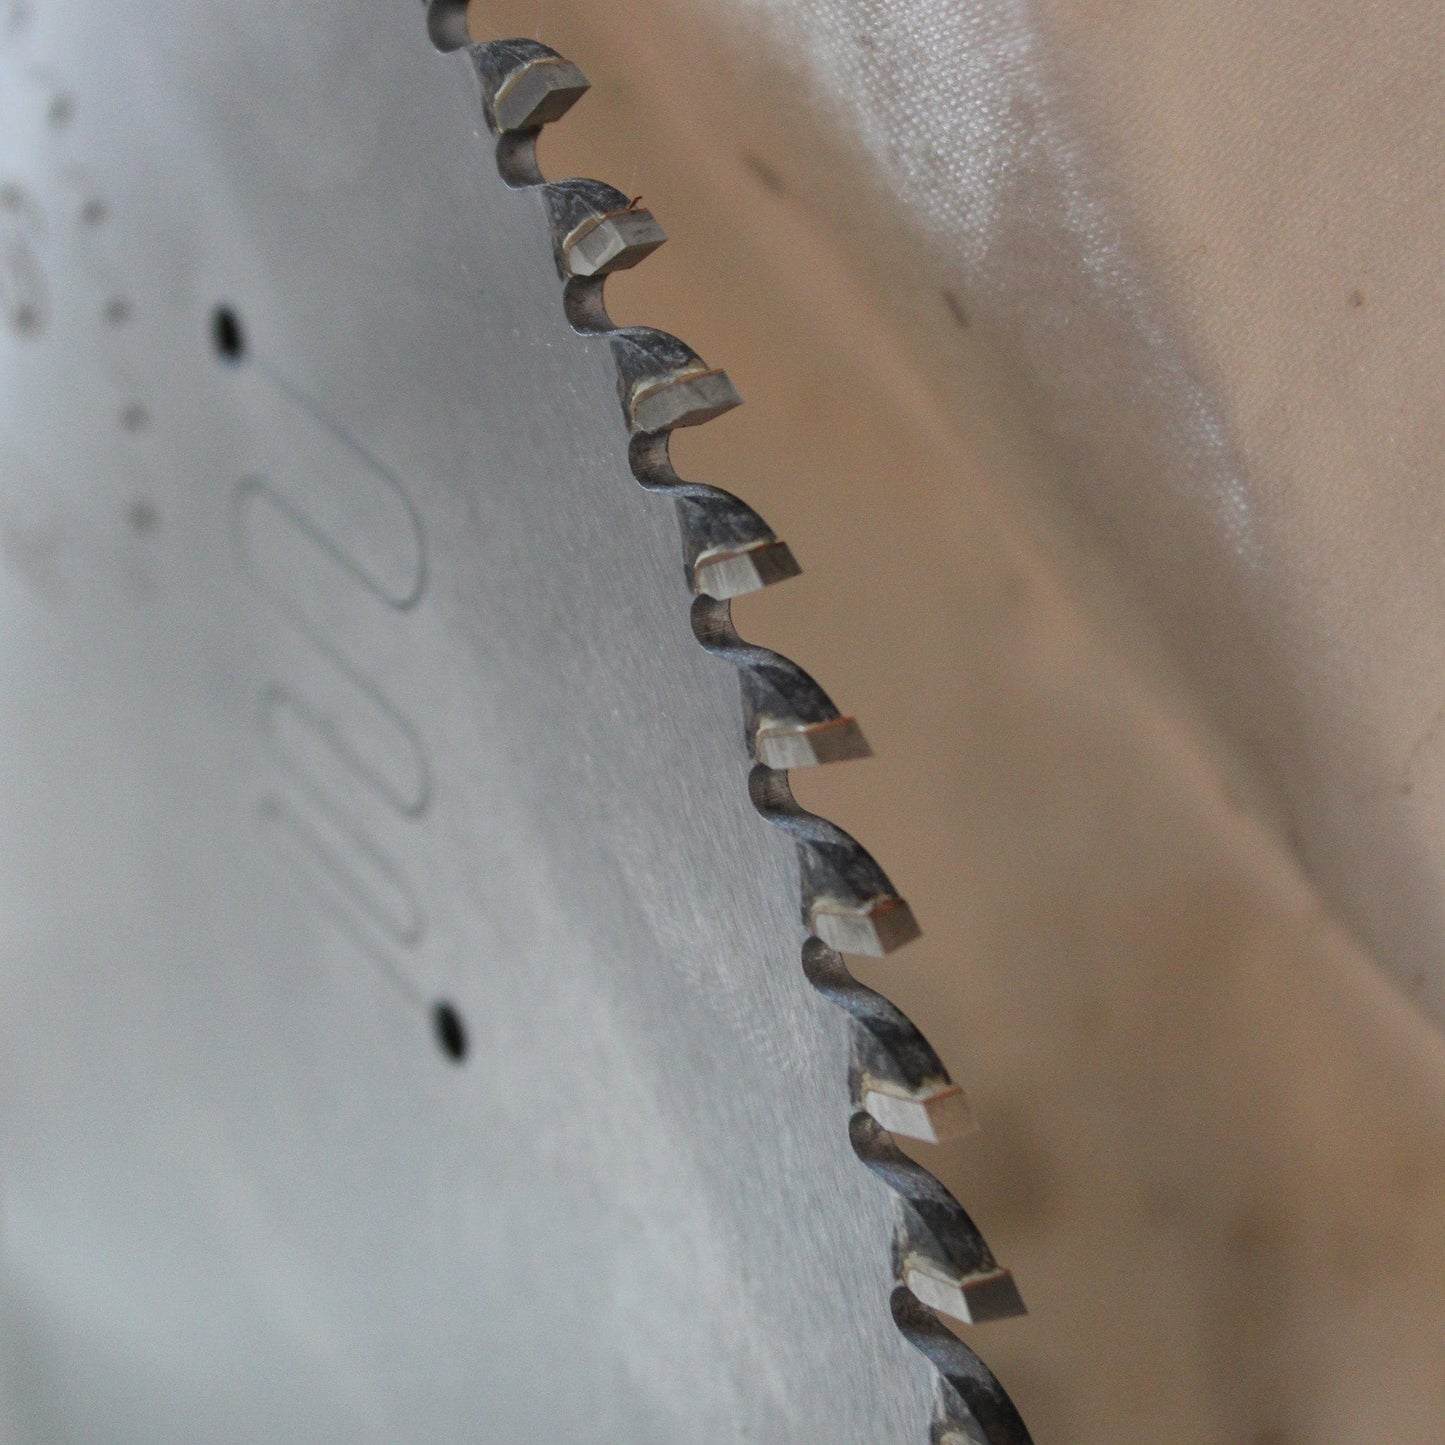 Saw Blades Acrylic | Polycarbonate Saw Blades for Schelling Saws